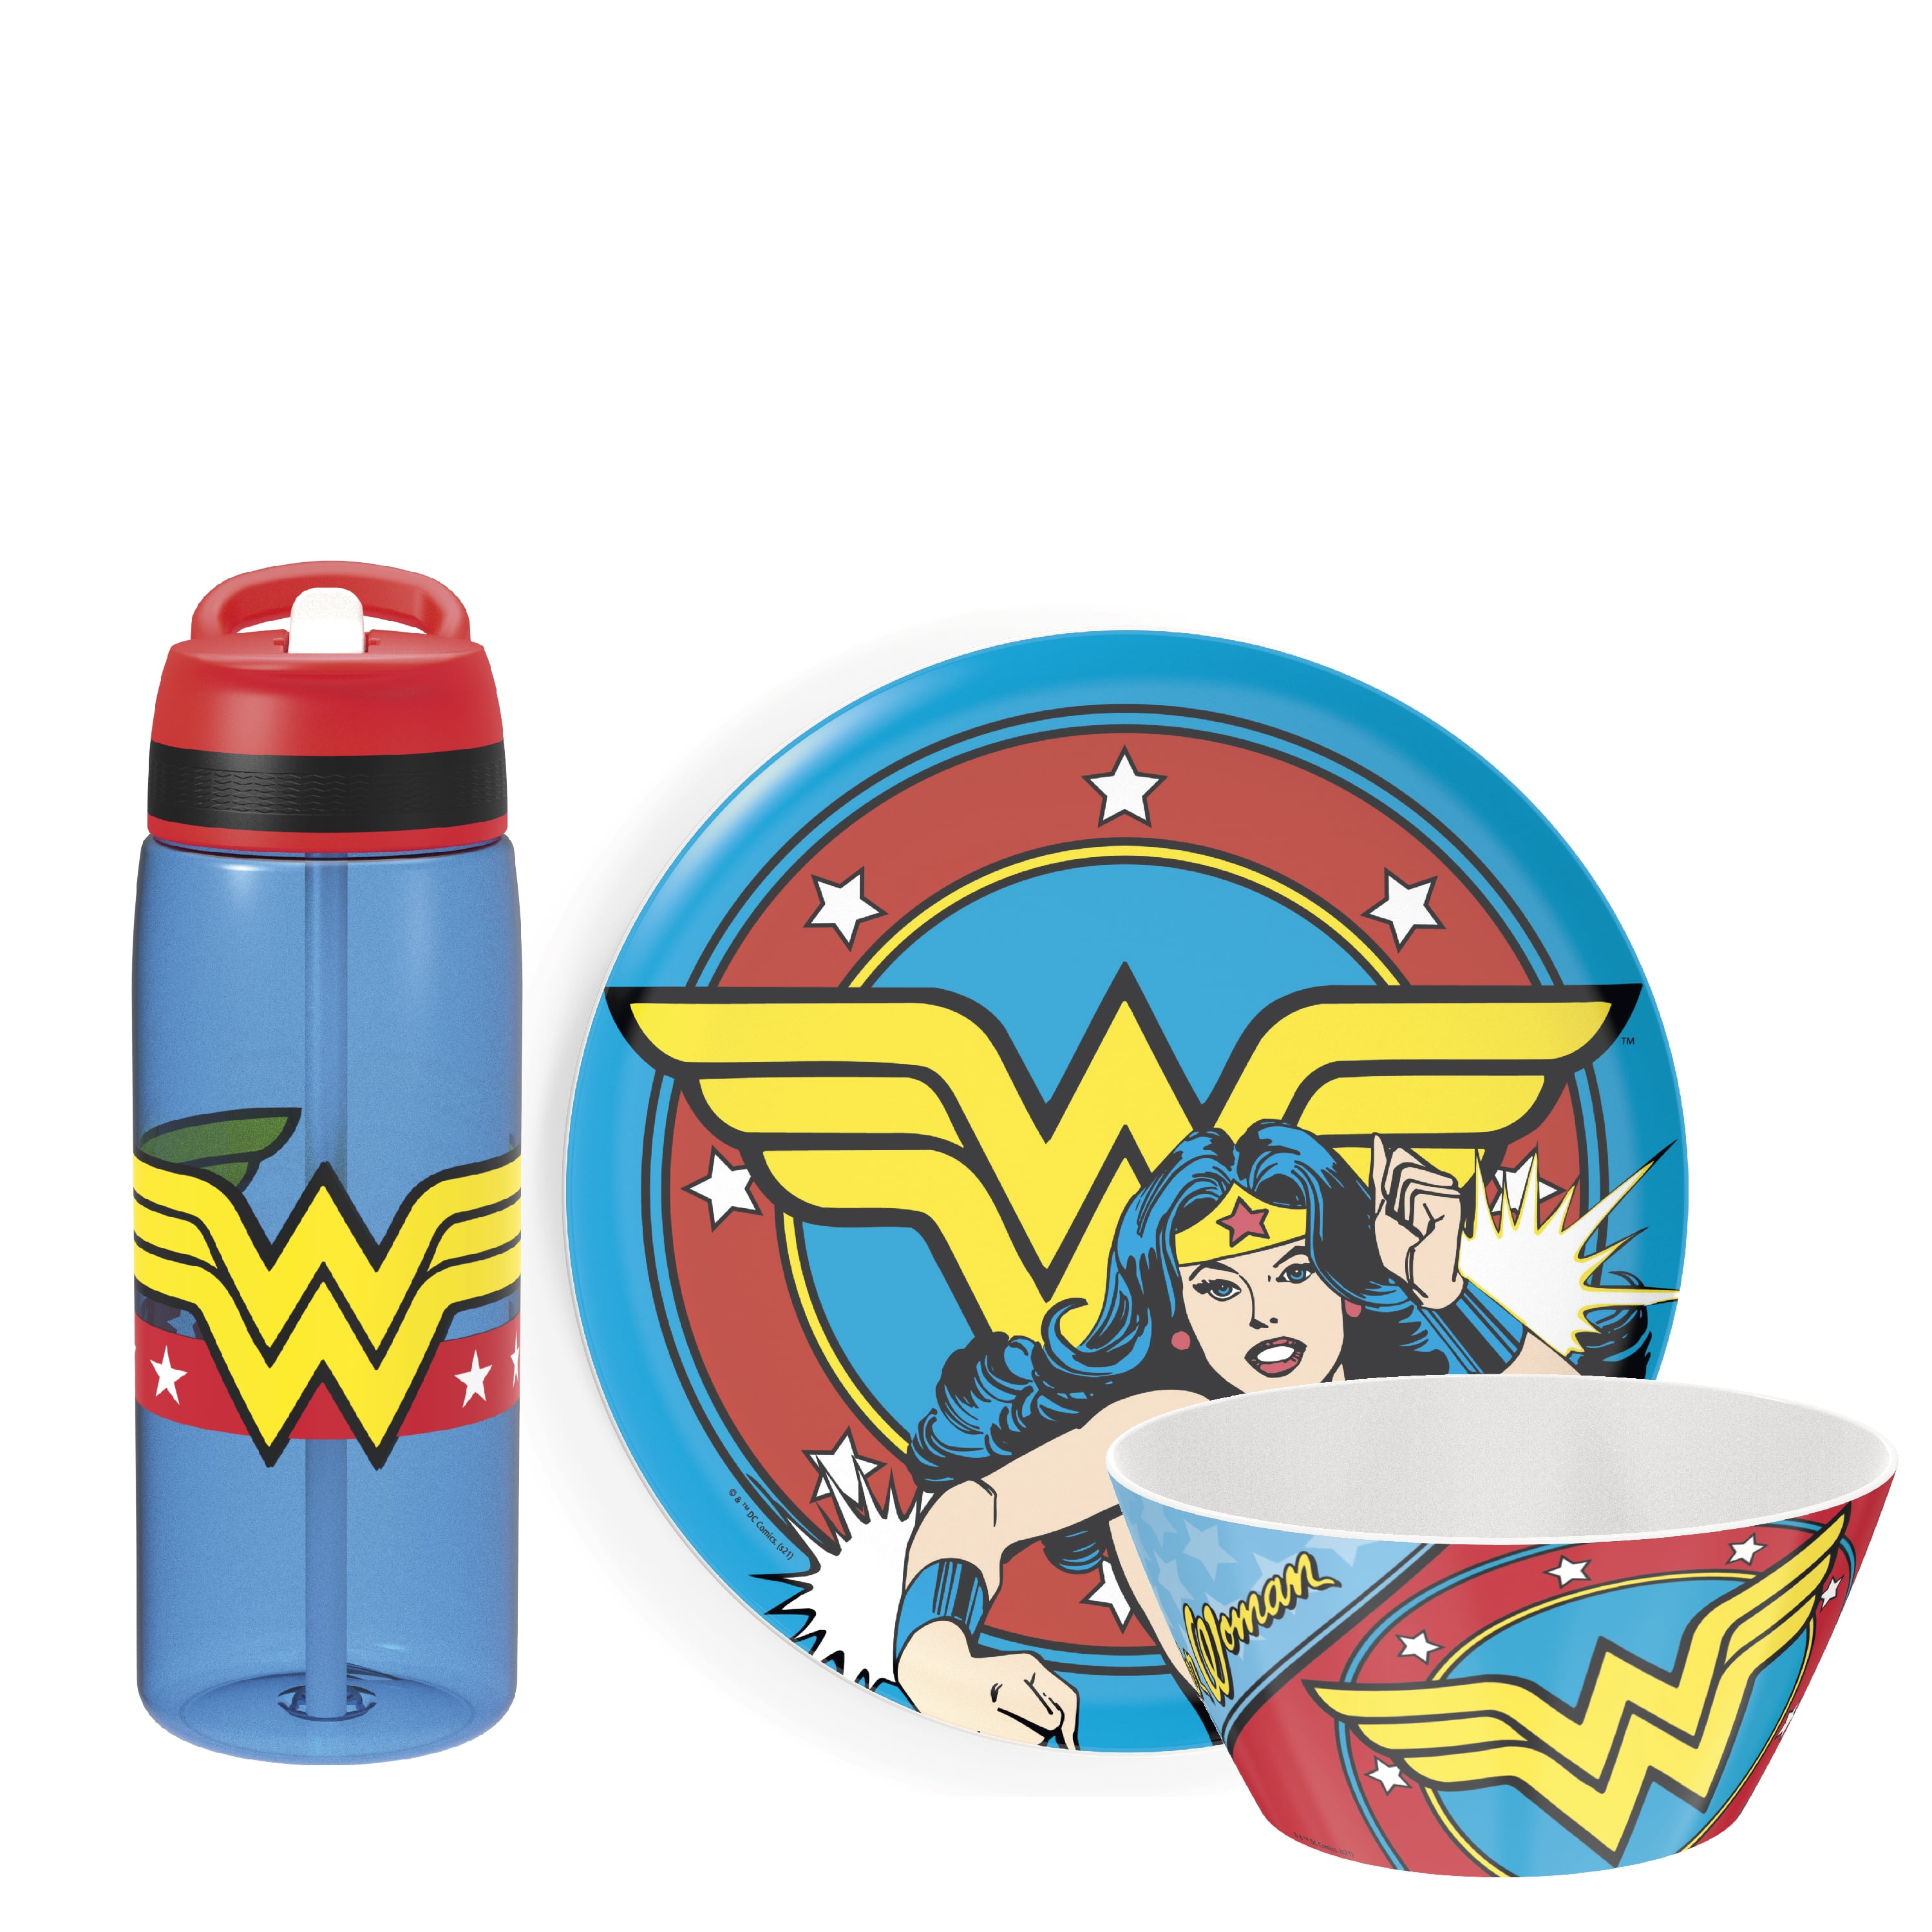 Spoontiques Wonder Woman Melamine Plate Set Multicolored 10 